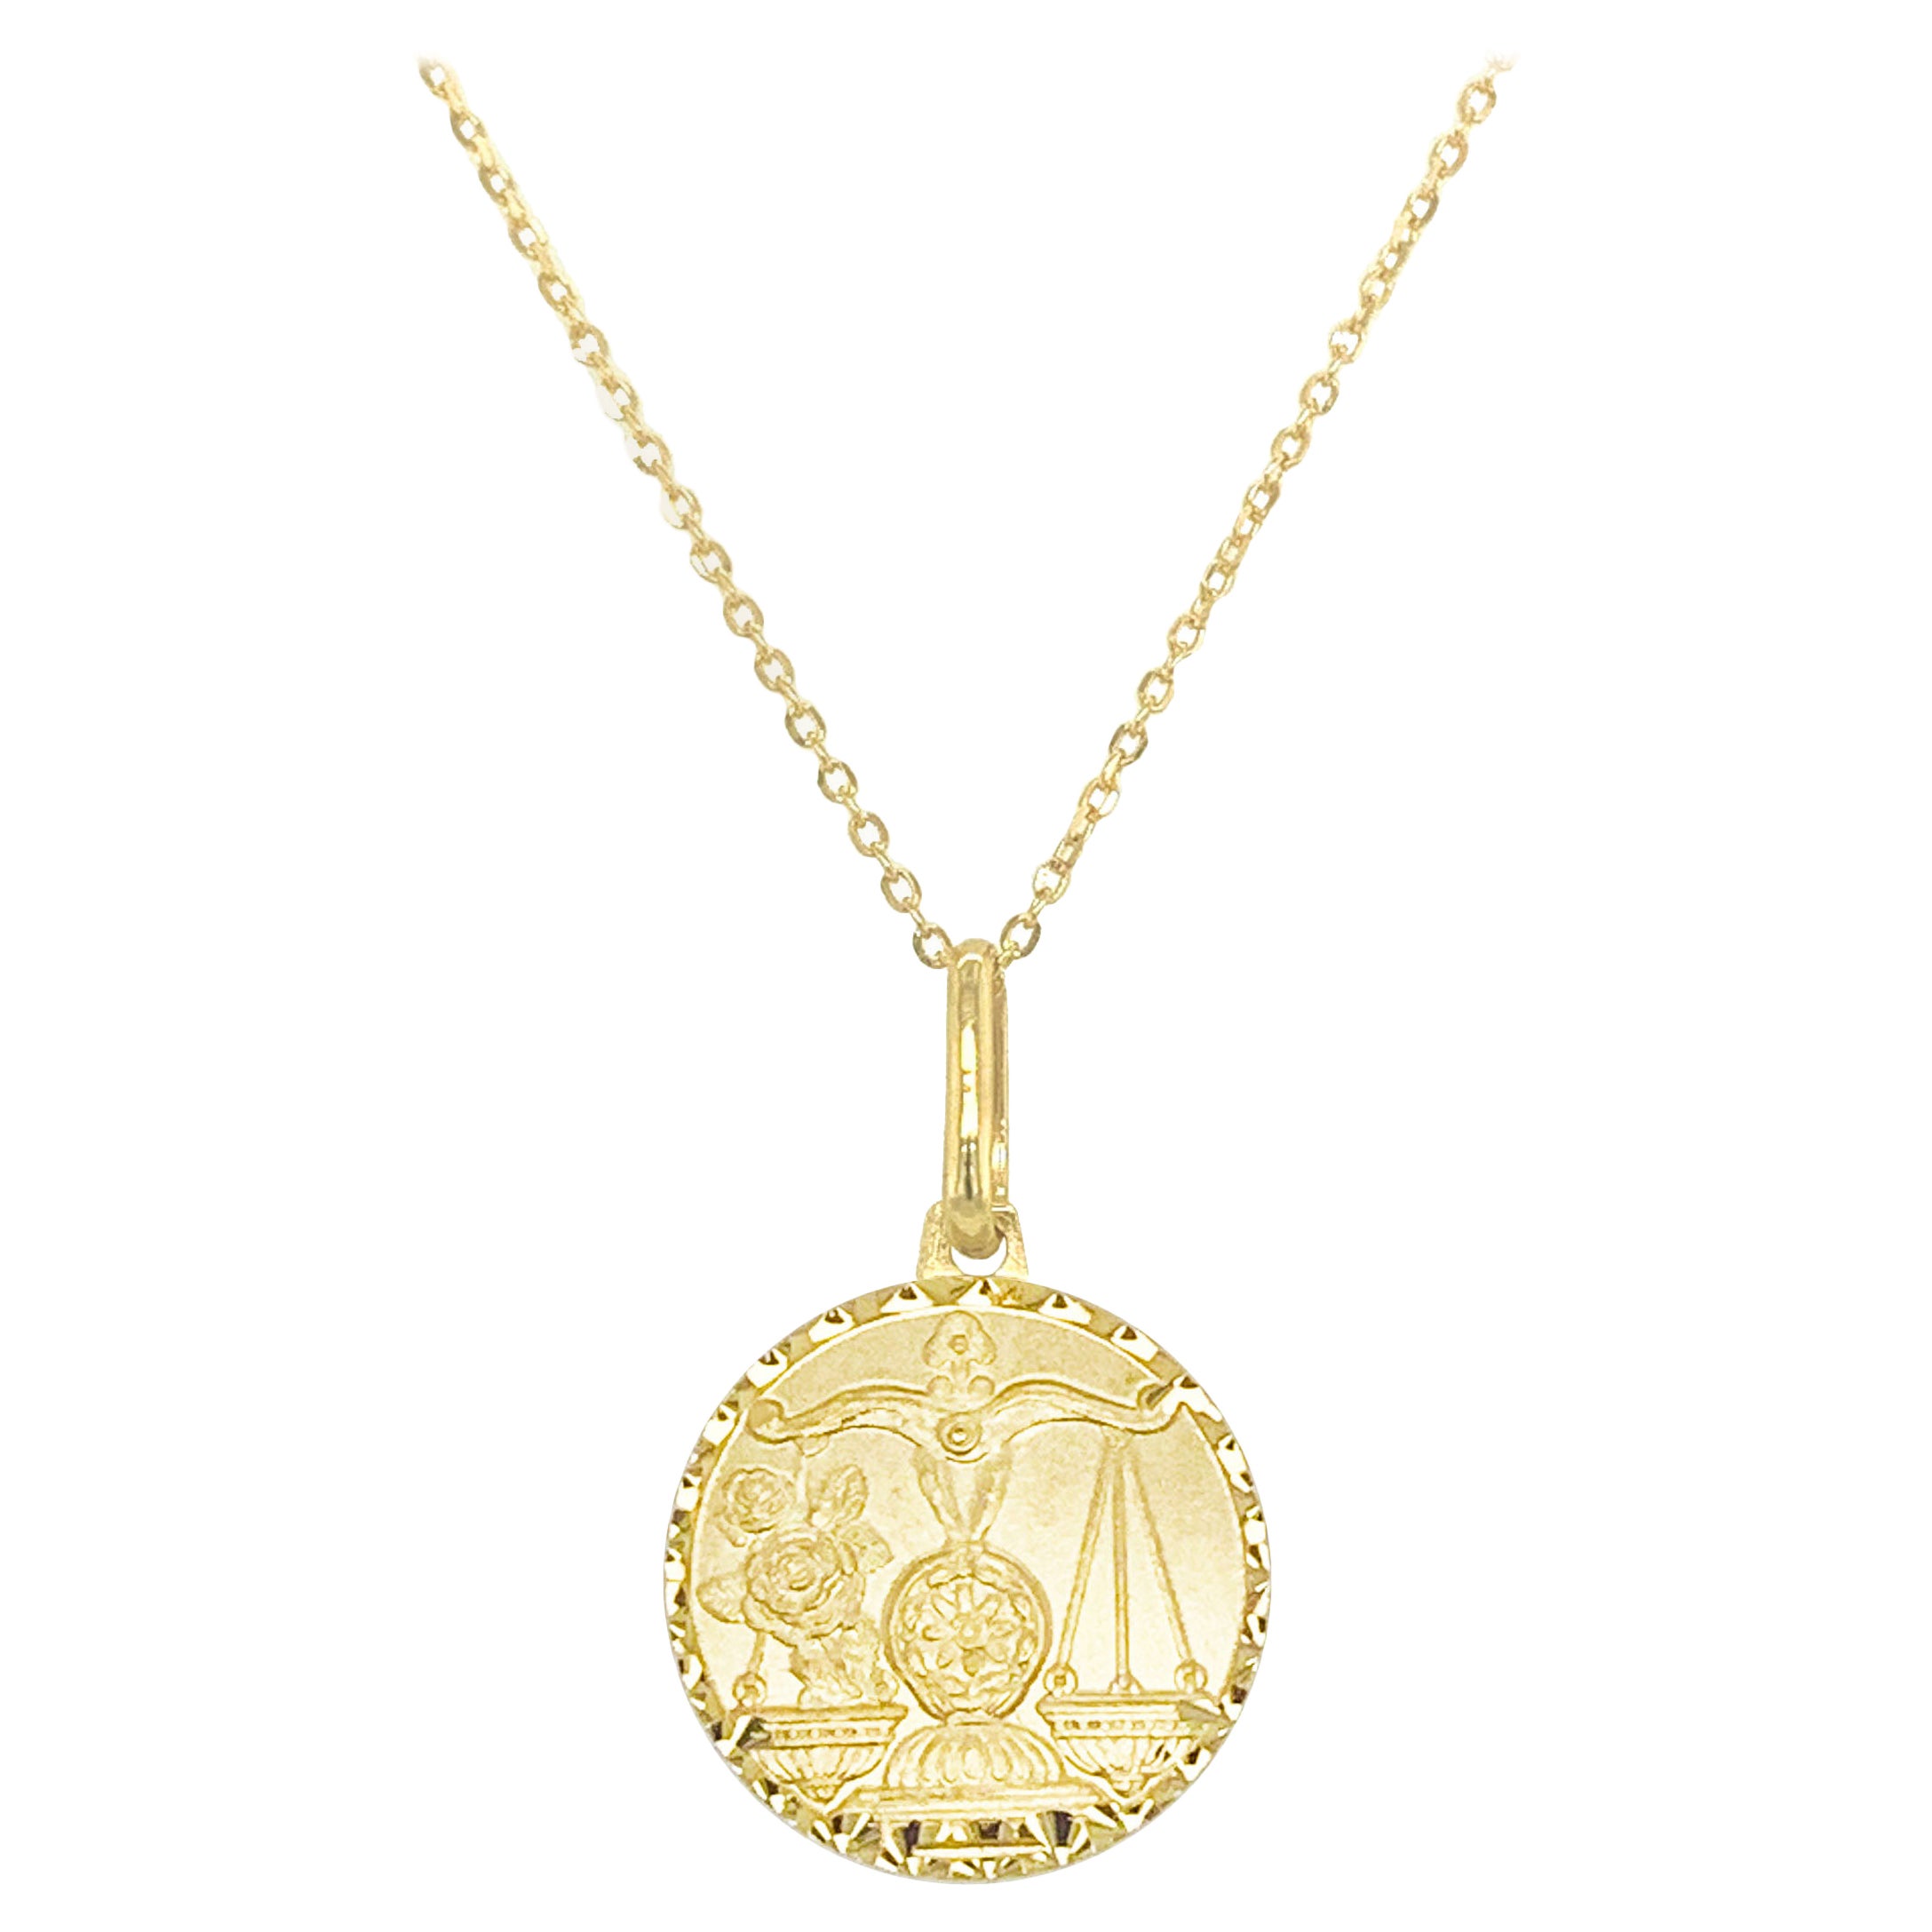 Collier pendentif signe du zodiaque en or jaune 14 carats, Libra